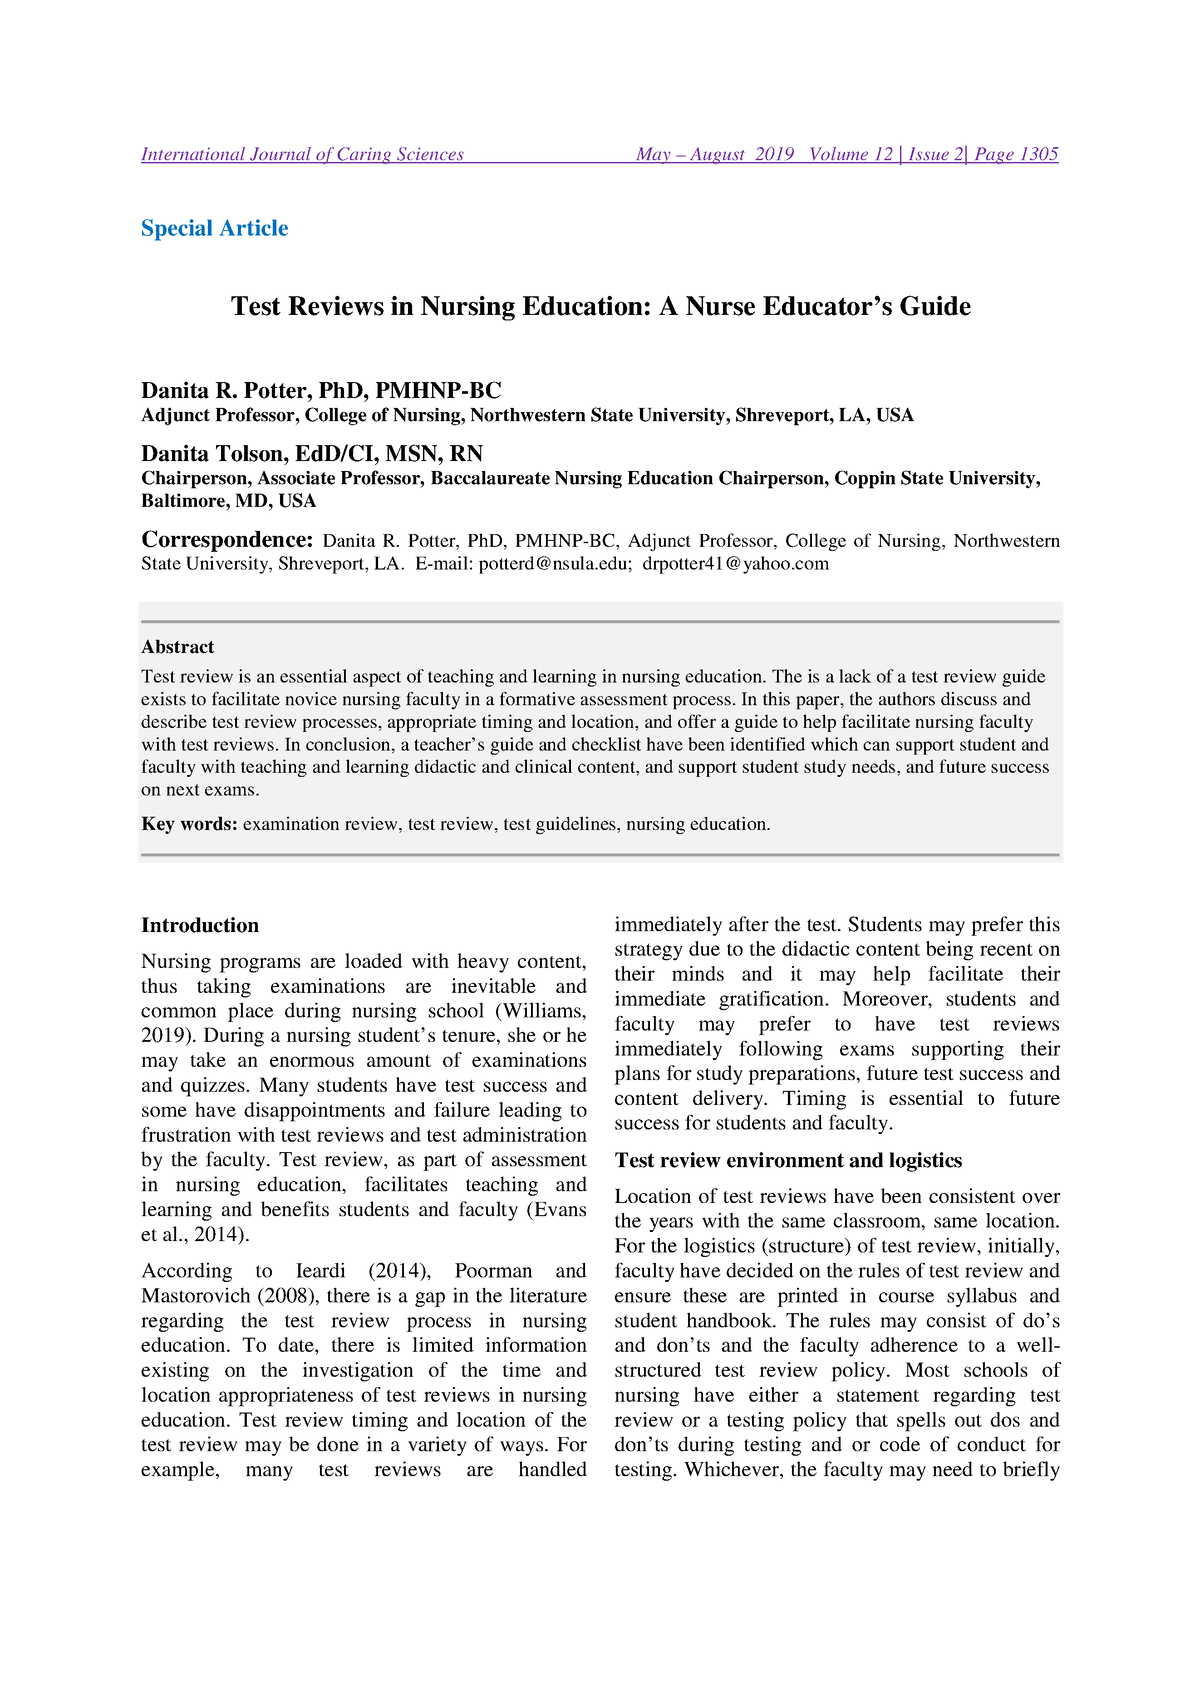 experimental research topics in pediatric nursing